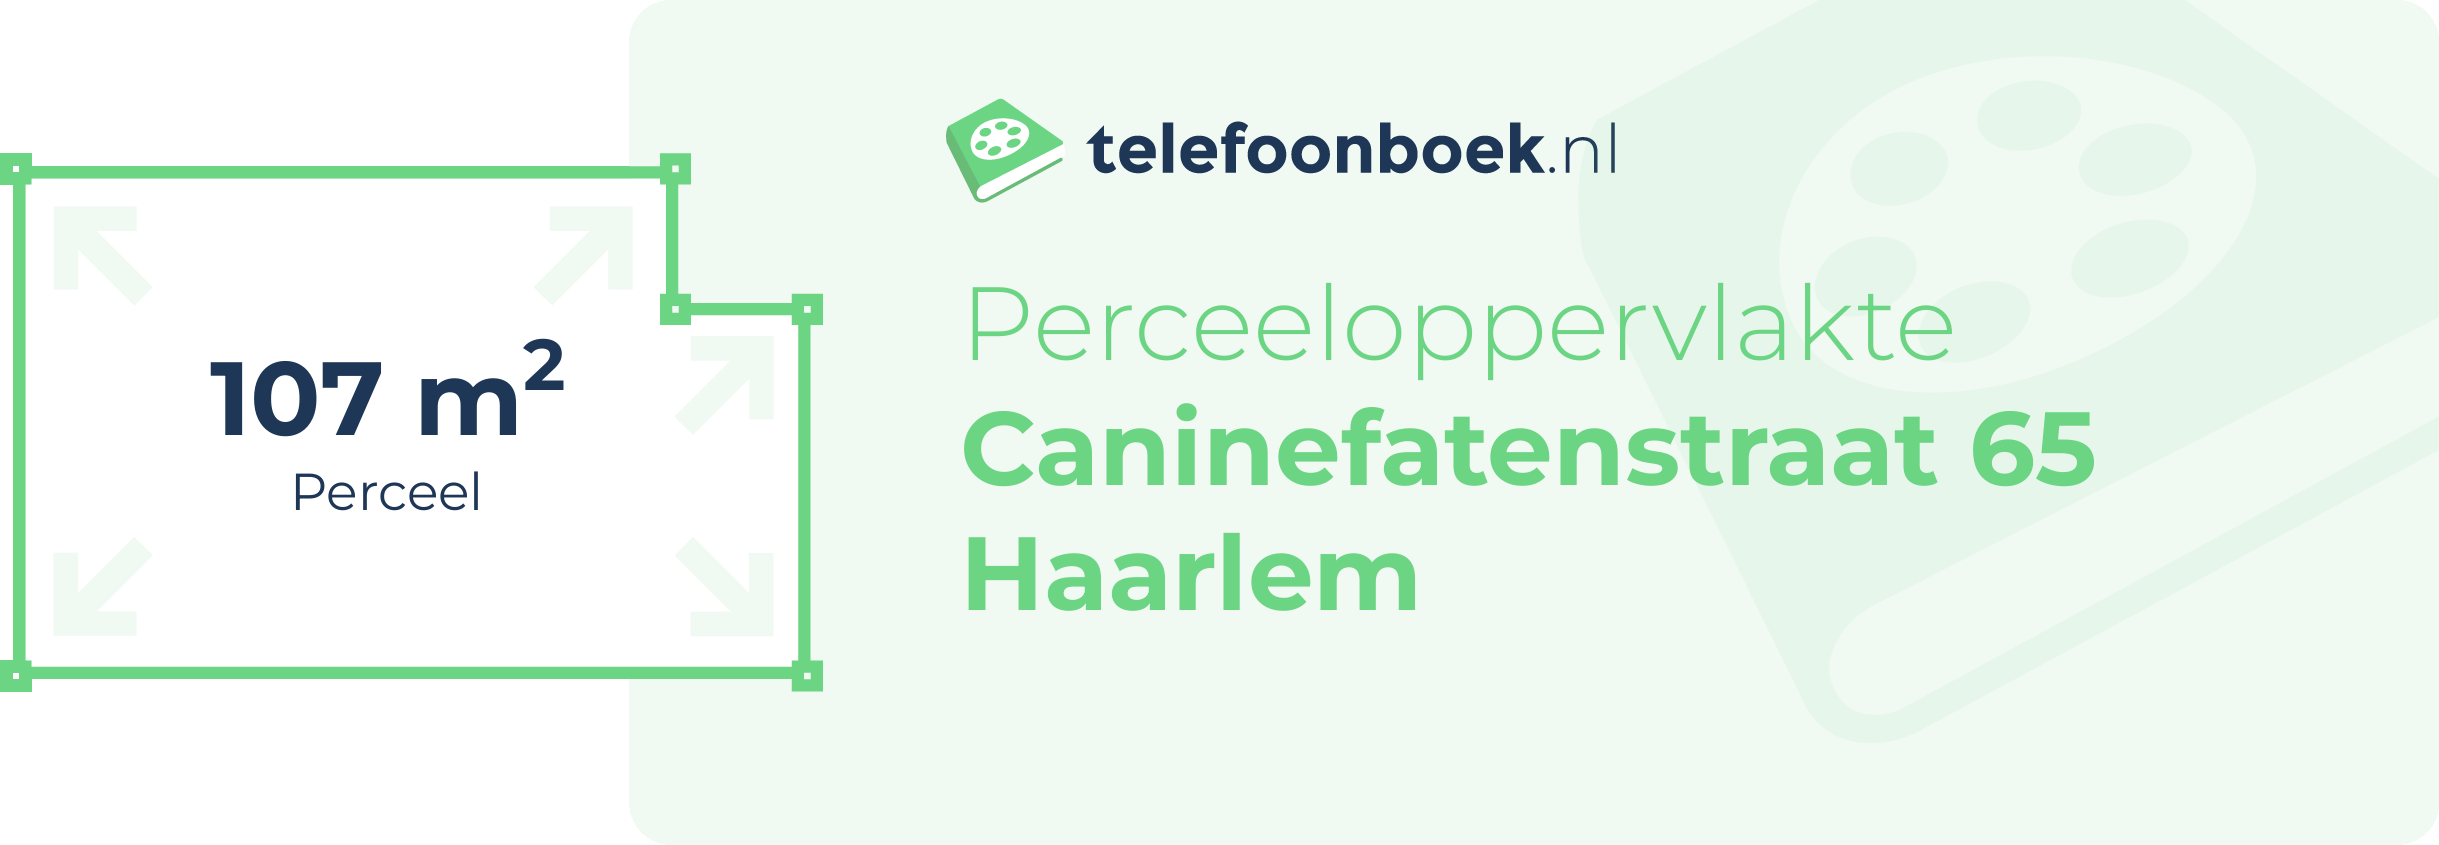 Perceeloppervlakte Caninefatenstraat 65 Haarlem